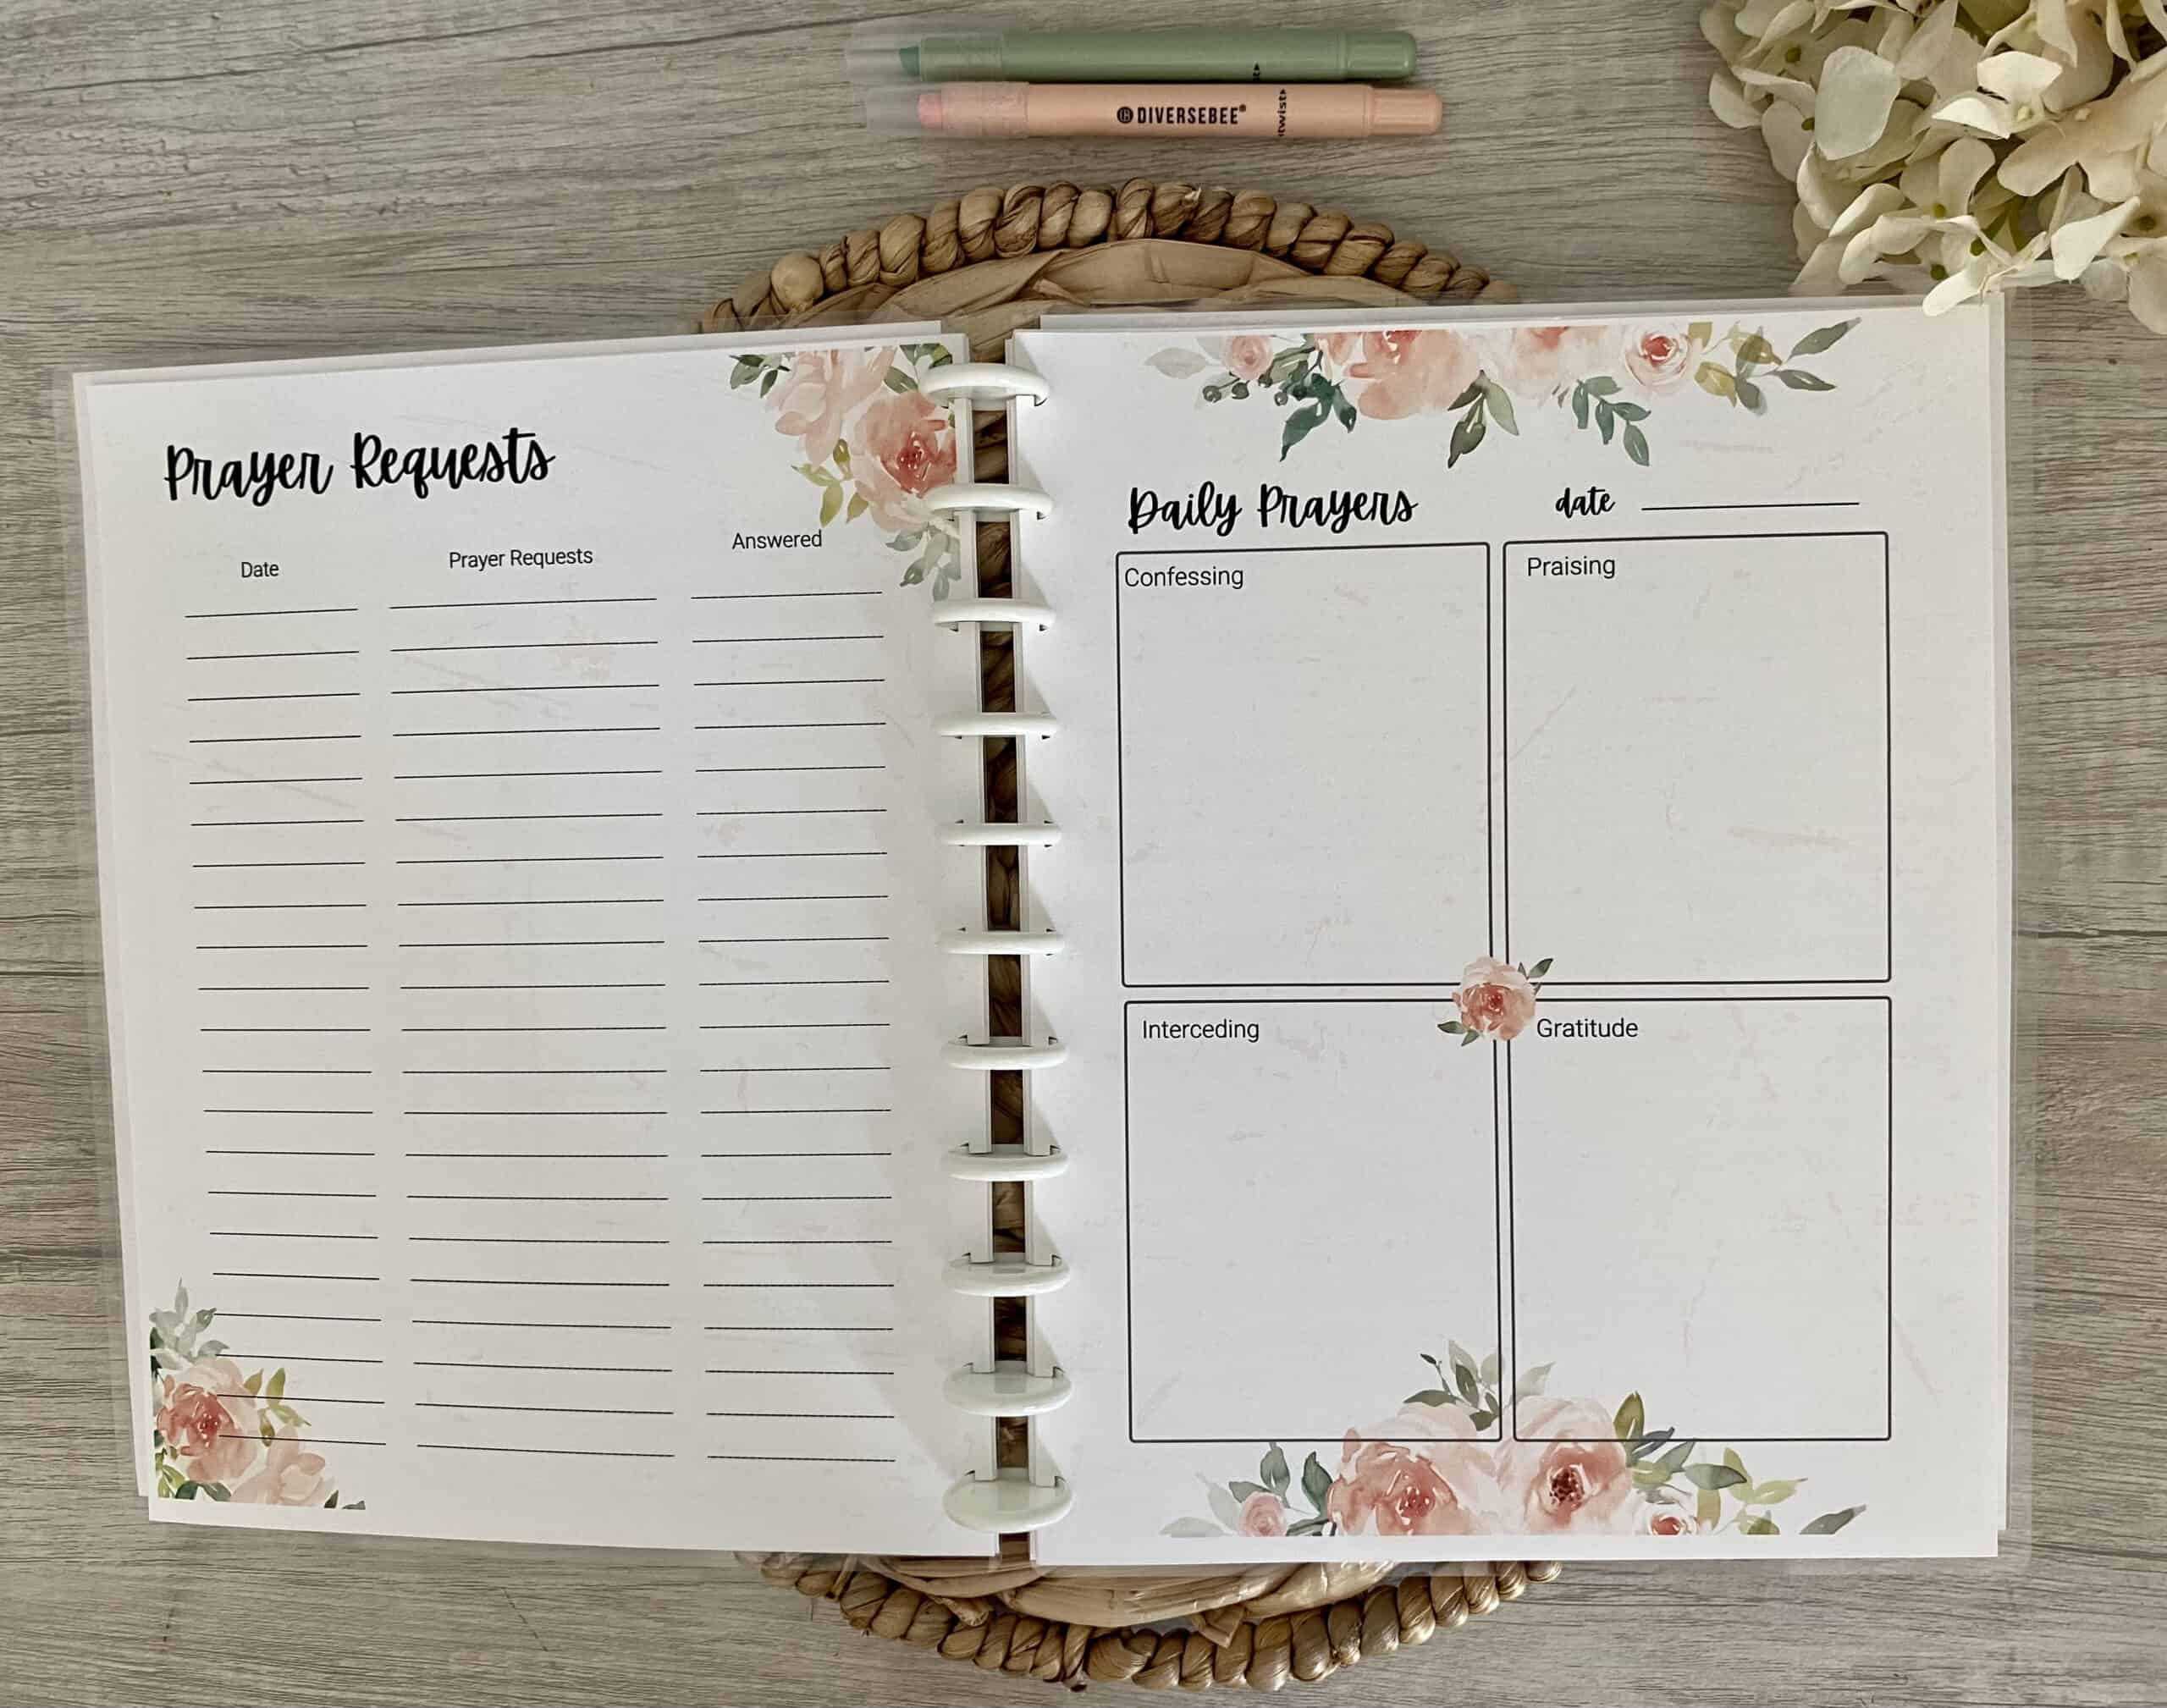 Daily prayer journal layout